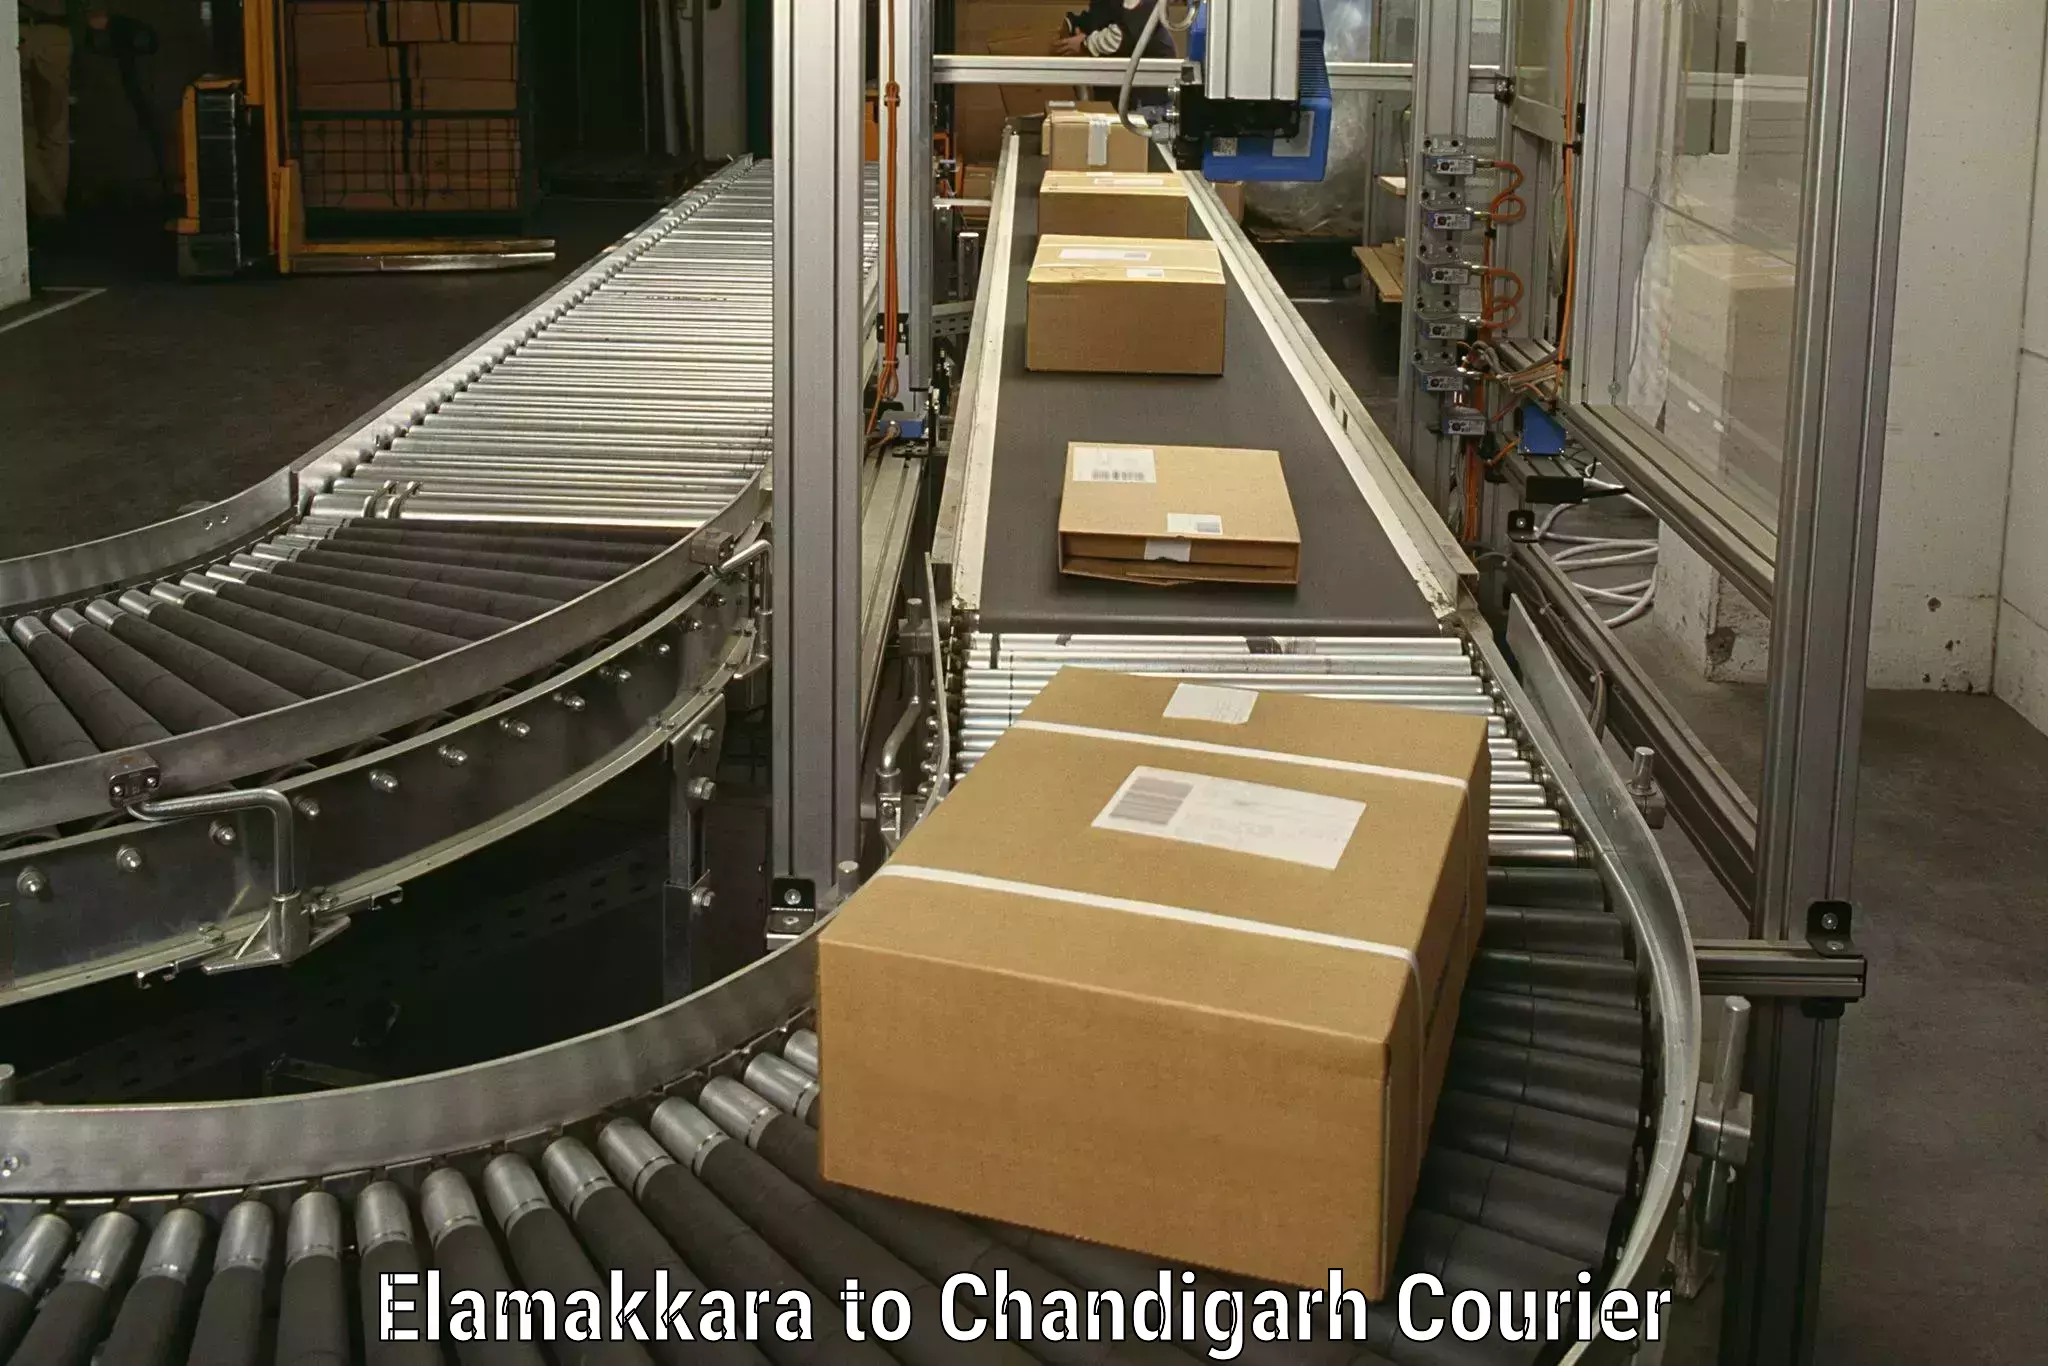 Trusted relocation experts Elamakkara to Chandigarh